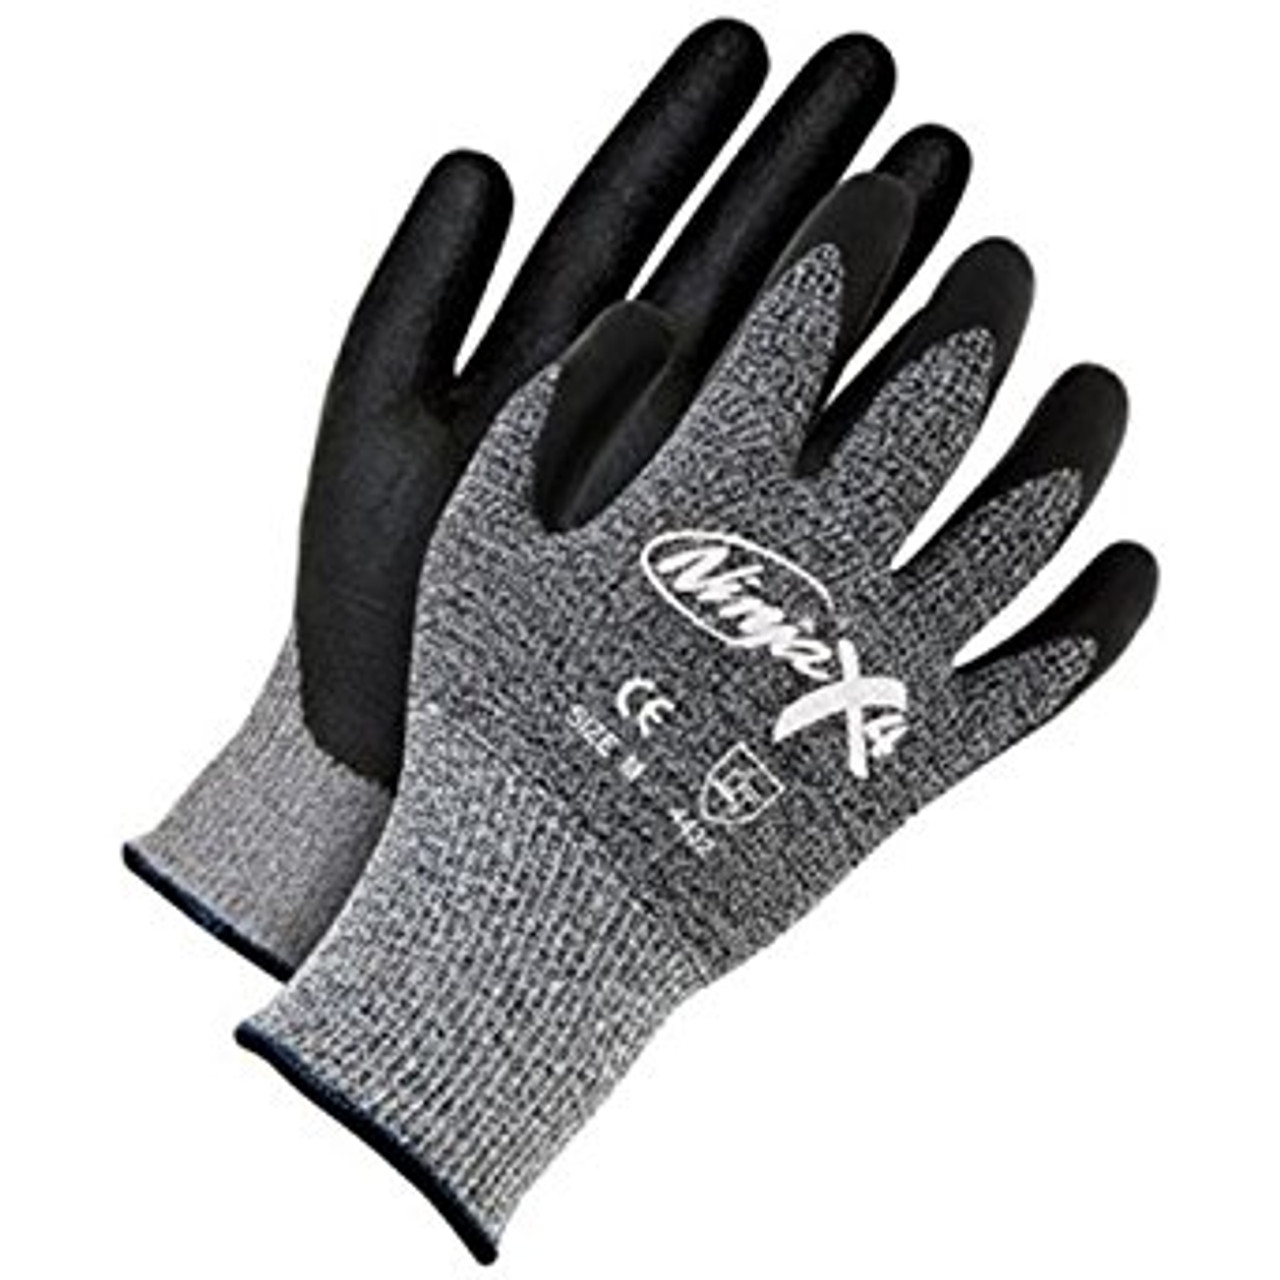 Ninja® X4 Bi-Polymer Coated Nylon/Fiberglass Knit Cut-Rez Glove Grey/Black  99-1-9730